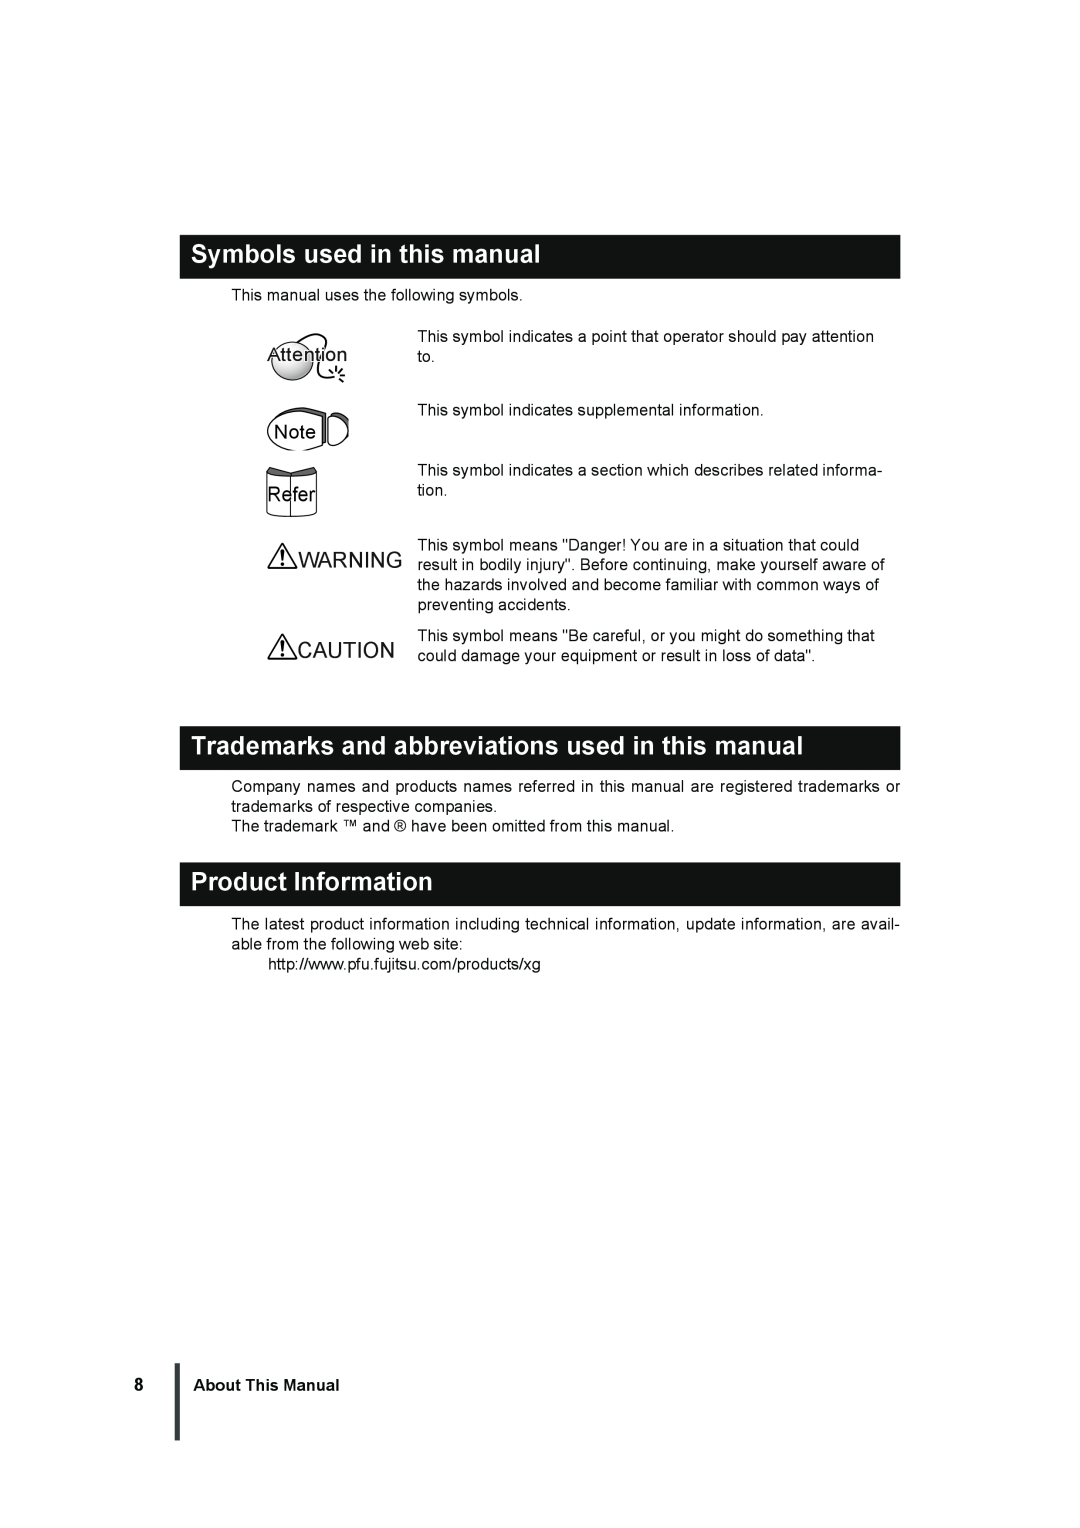 Fujitsu XG700 Symbols used in this manual, Trademarks and abbreviations used in this manual, Product Information, Refer 